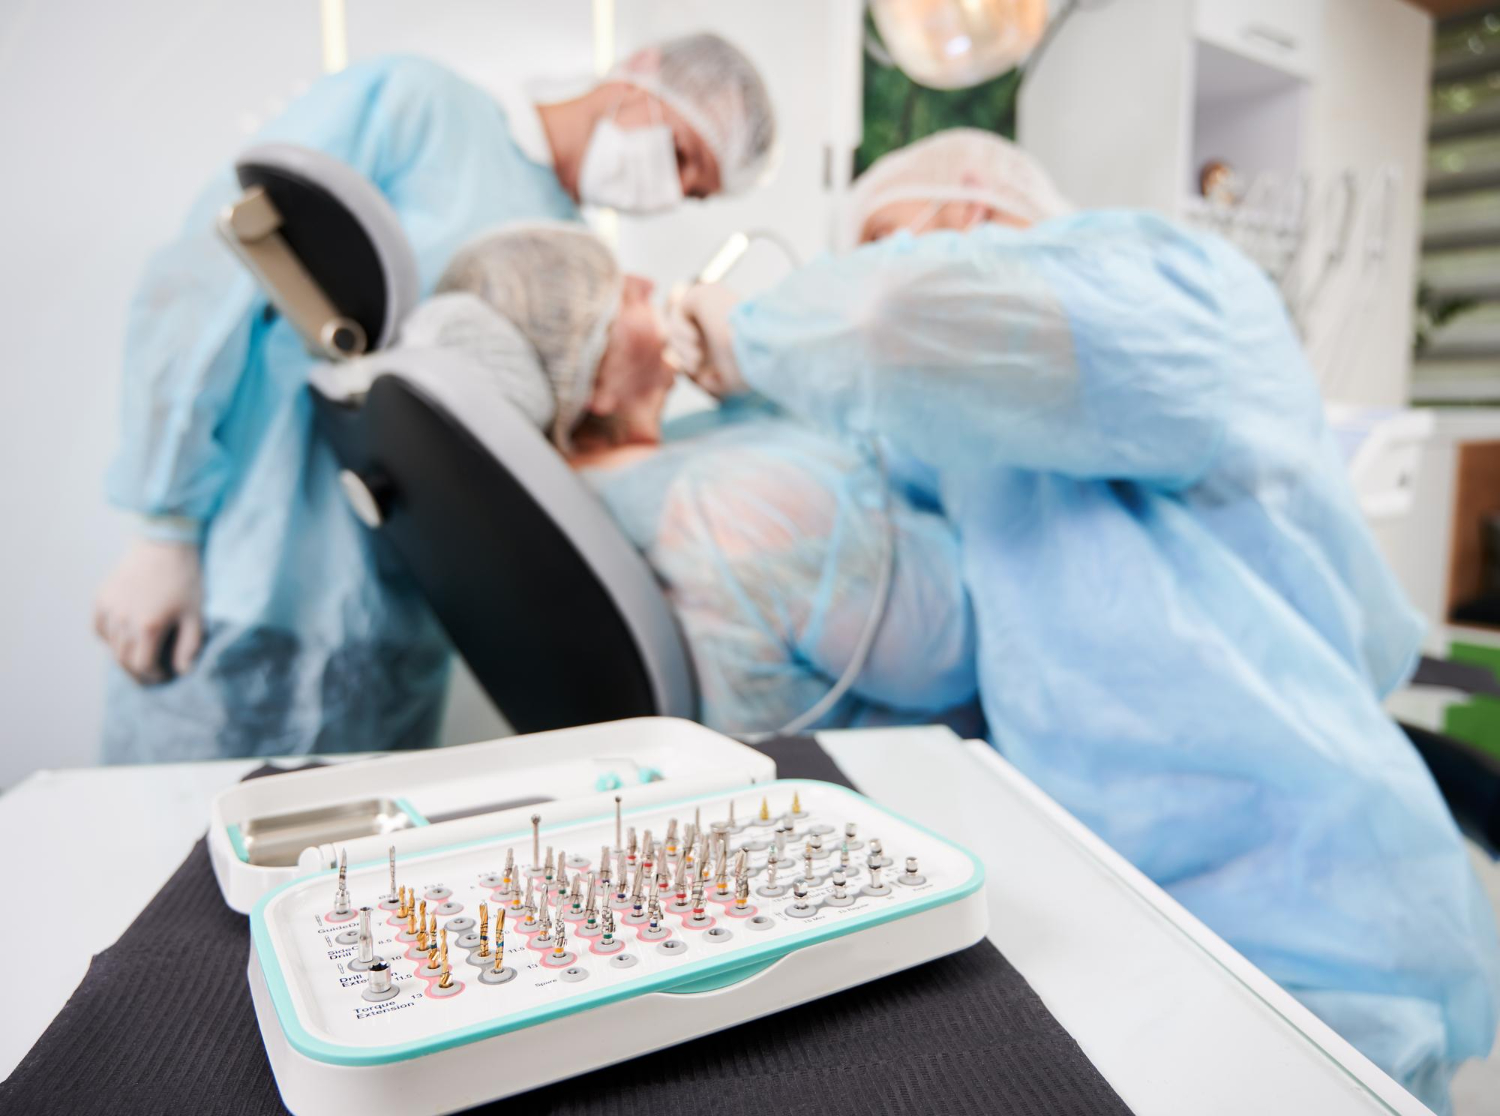 La técnica de implante dental guiada